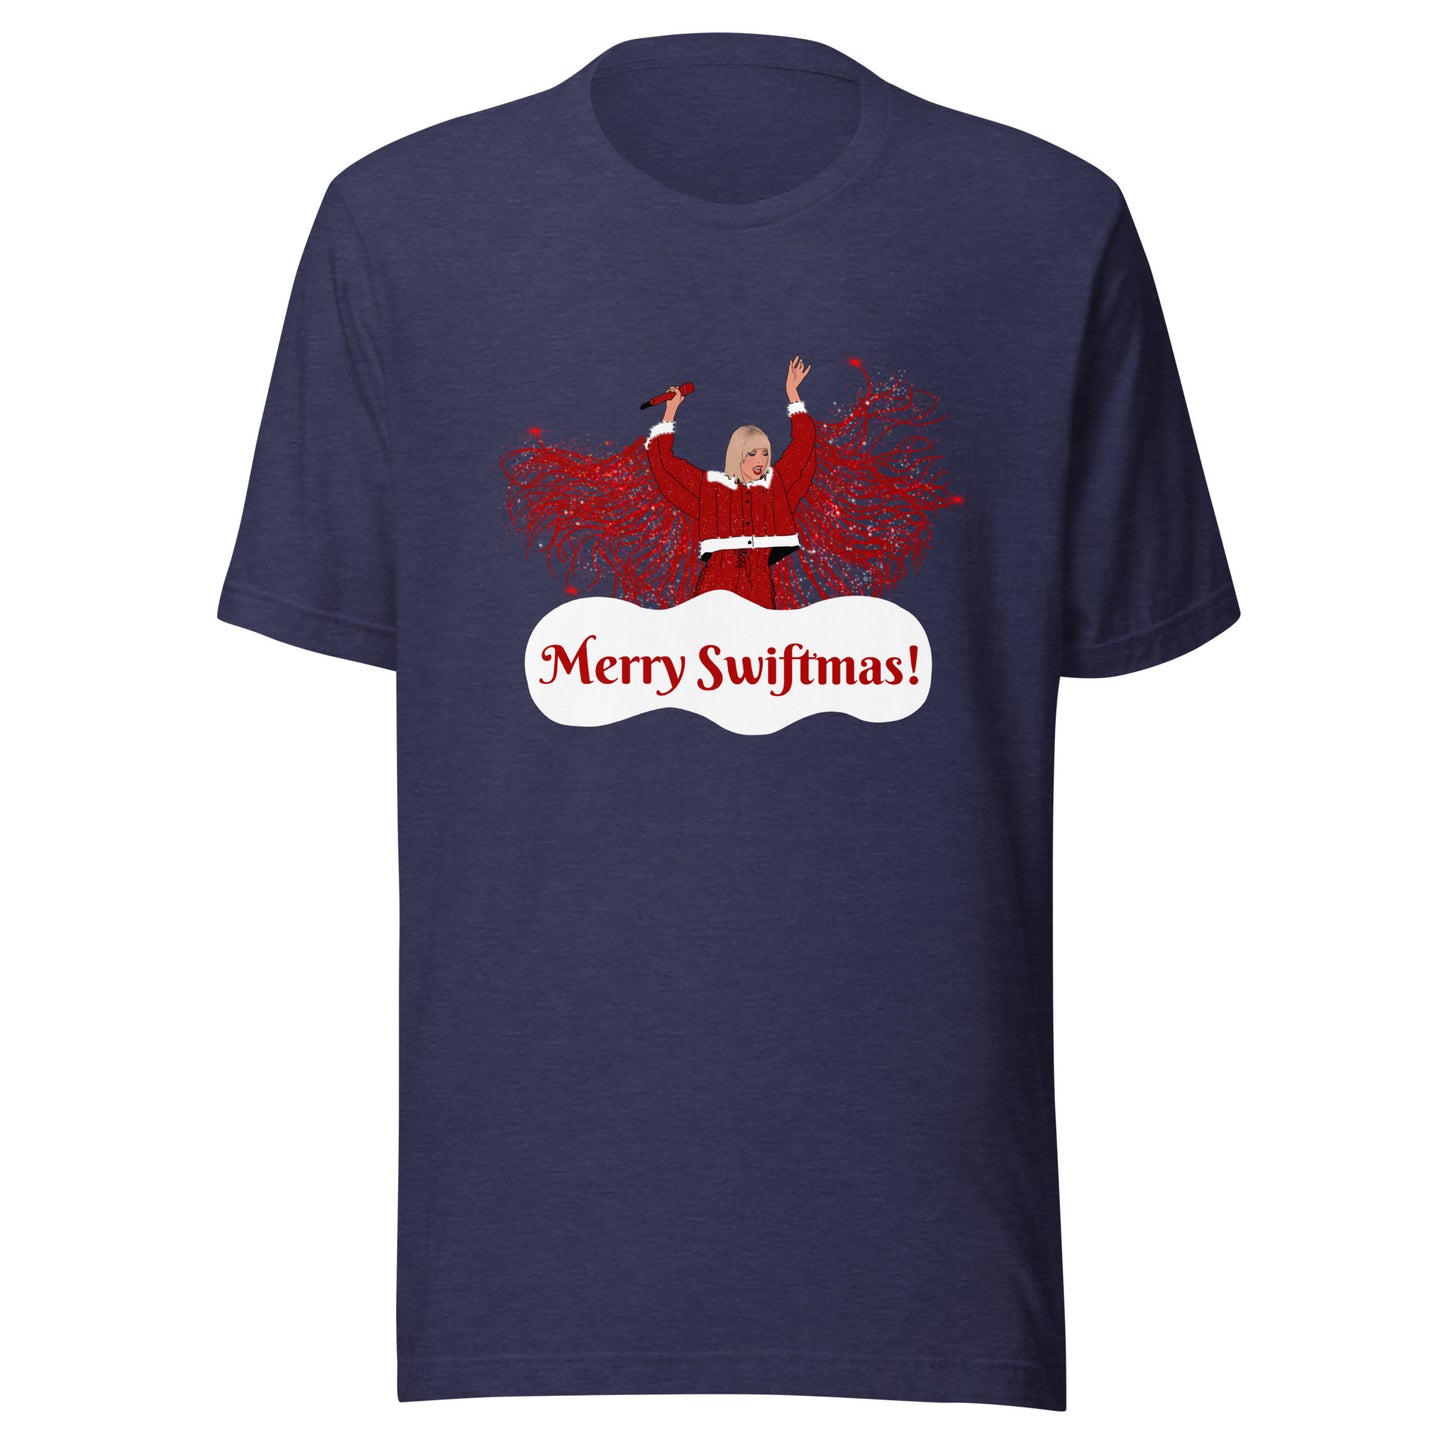 Merry Swiftmas Unisex T-shirt